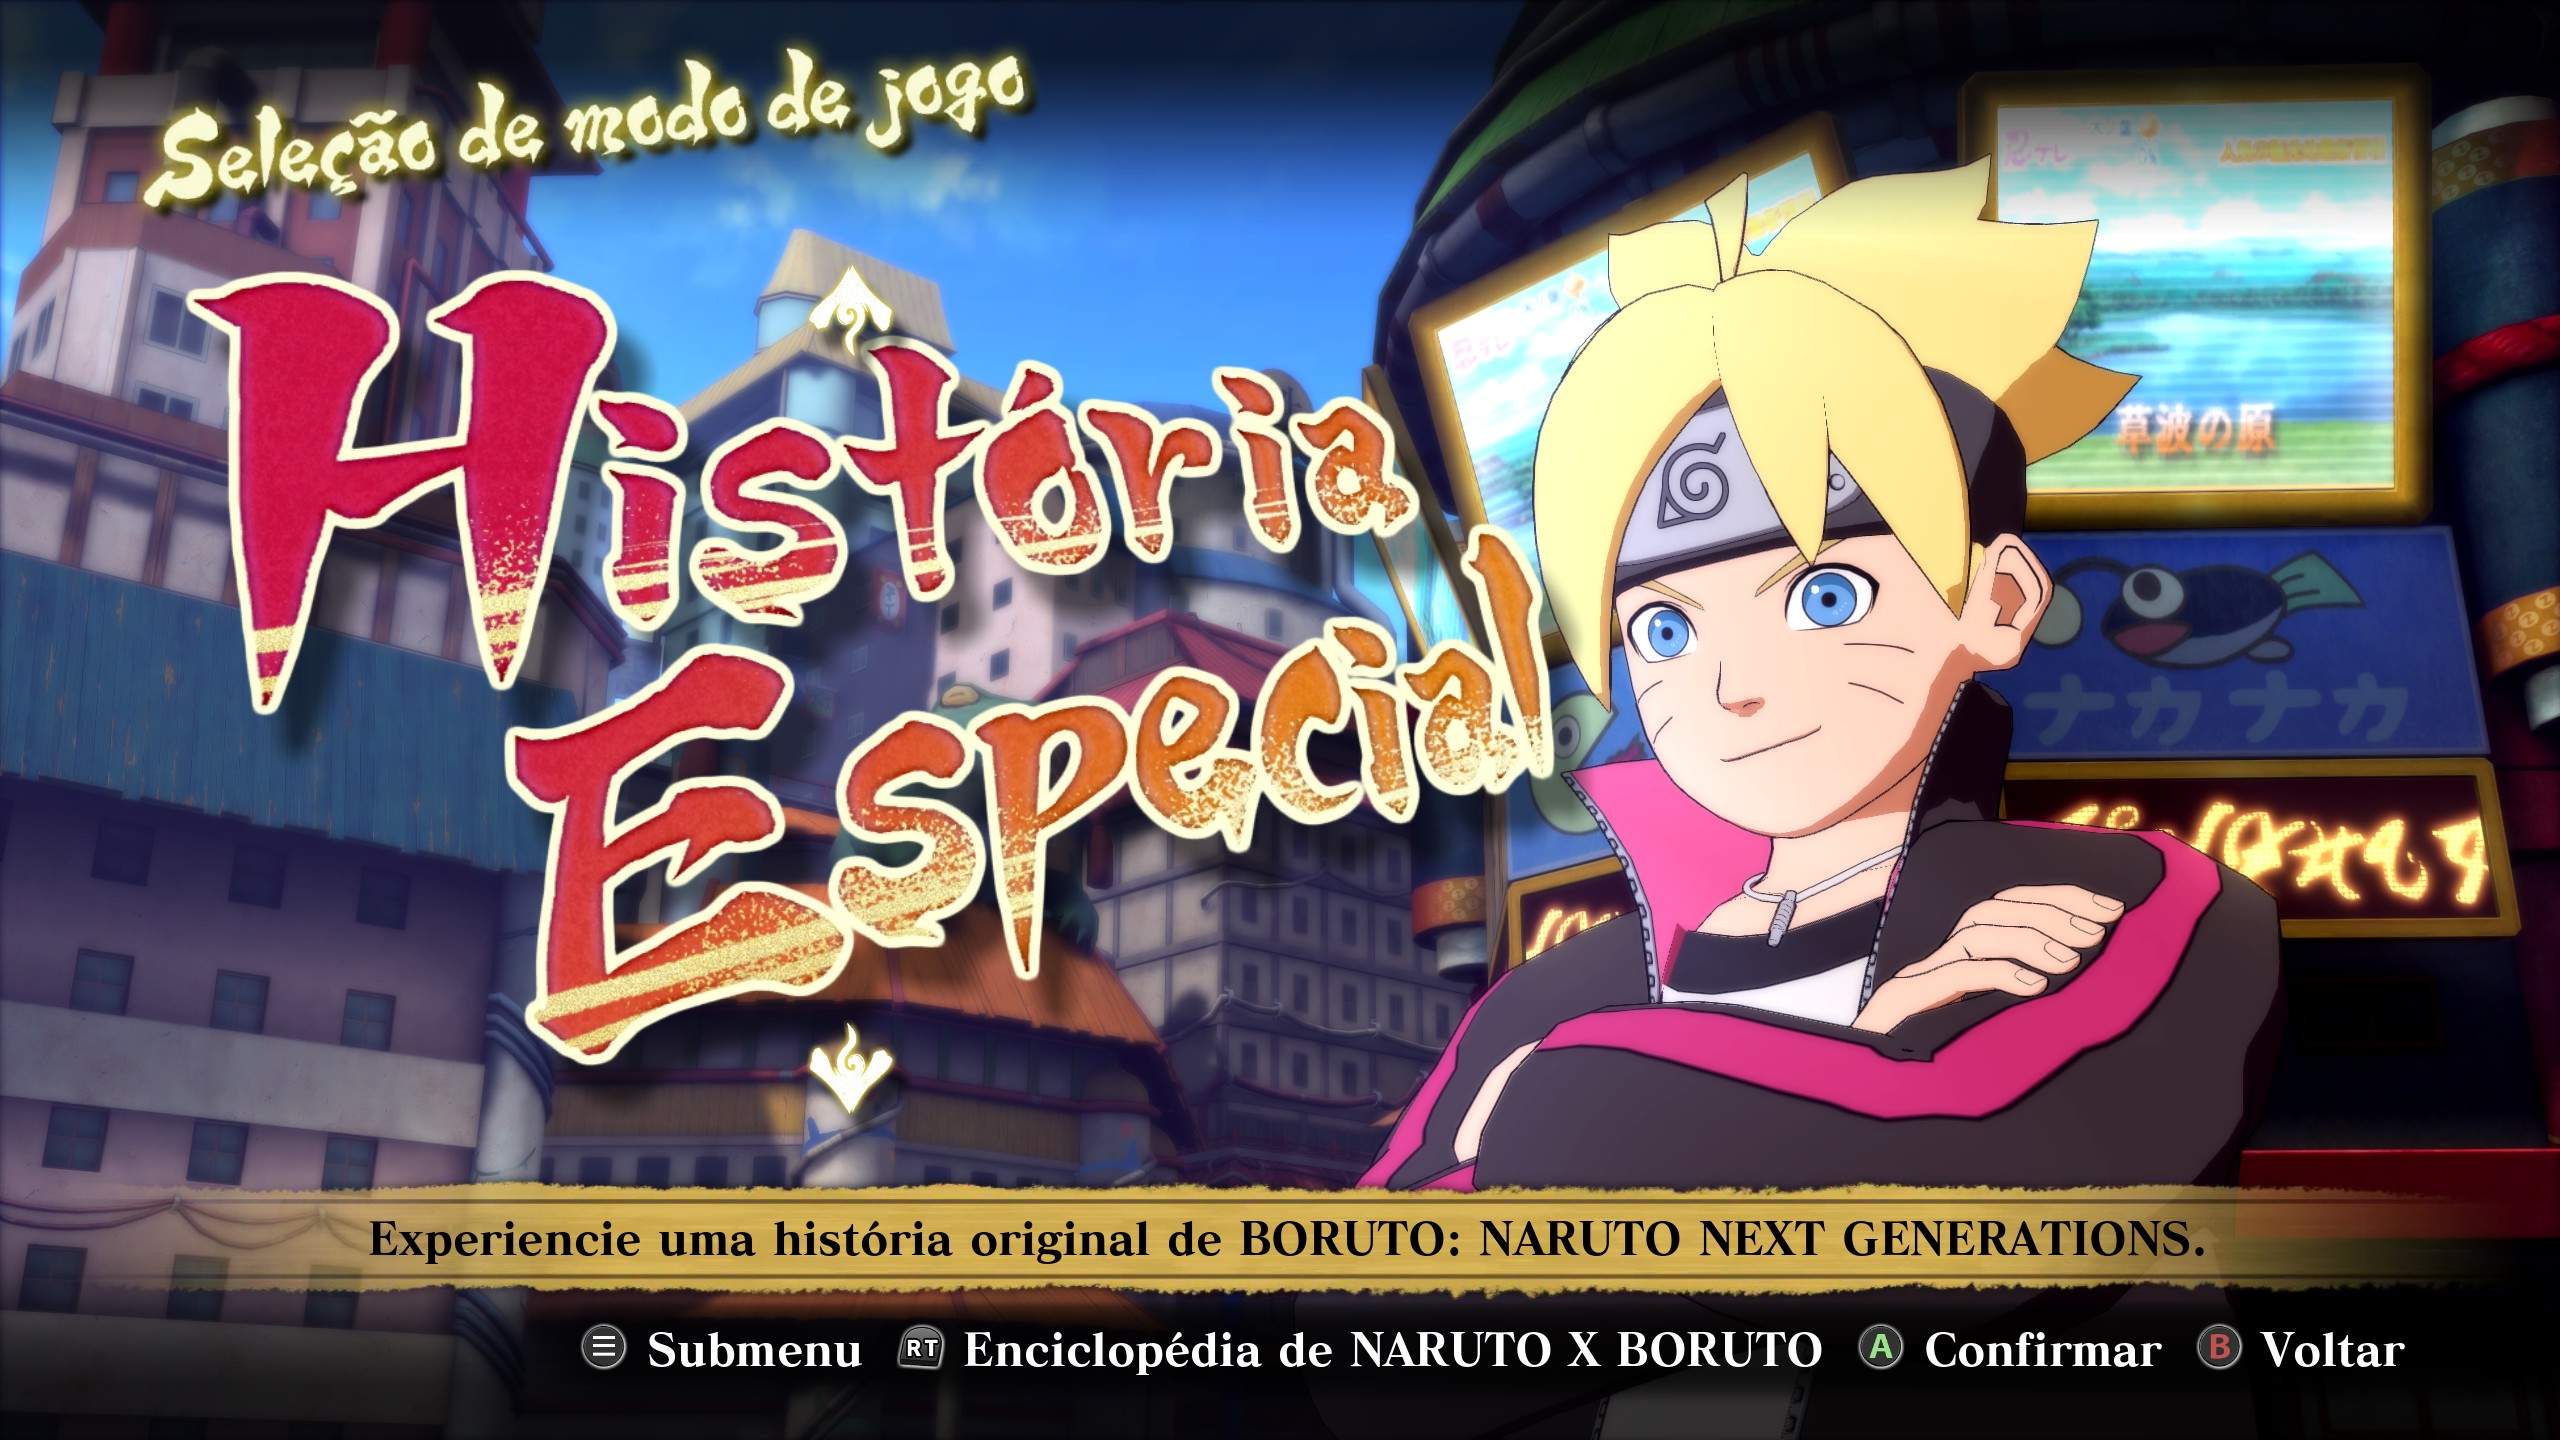 Naruto Shippuden: Road To Boruto: Vale a pena?